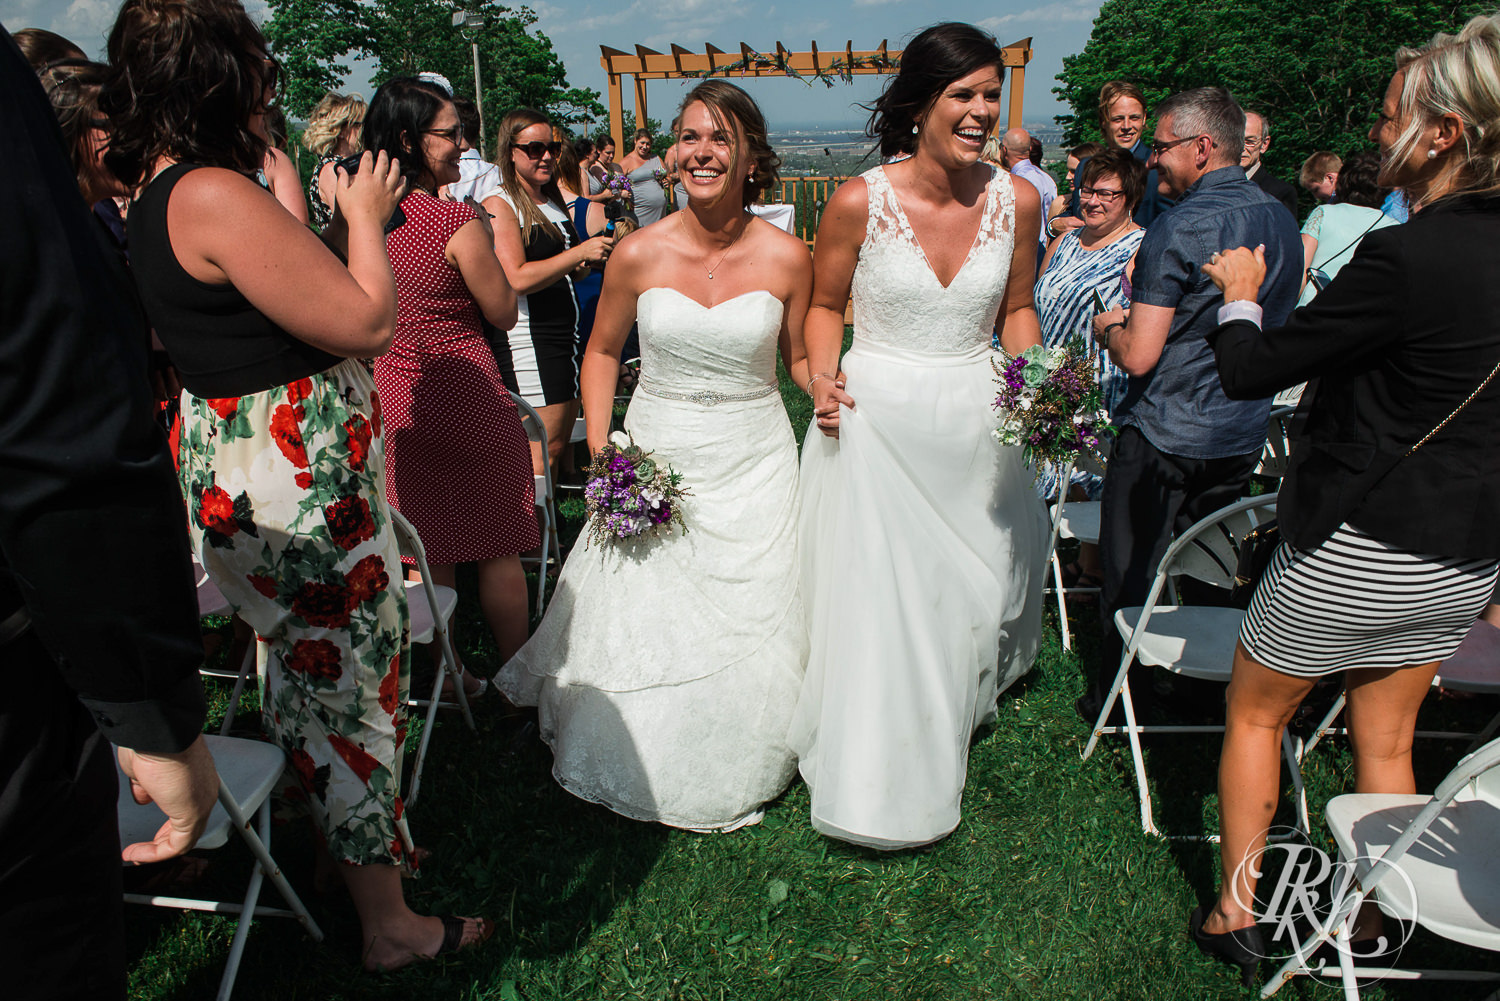 Lesbian brides laugh walking down aisle at Spirit Mountain in Duluth, Minnesota.